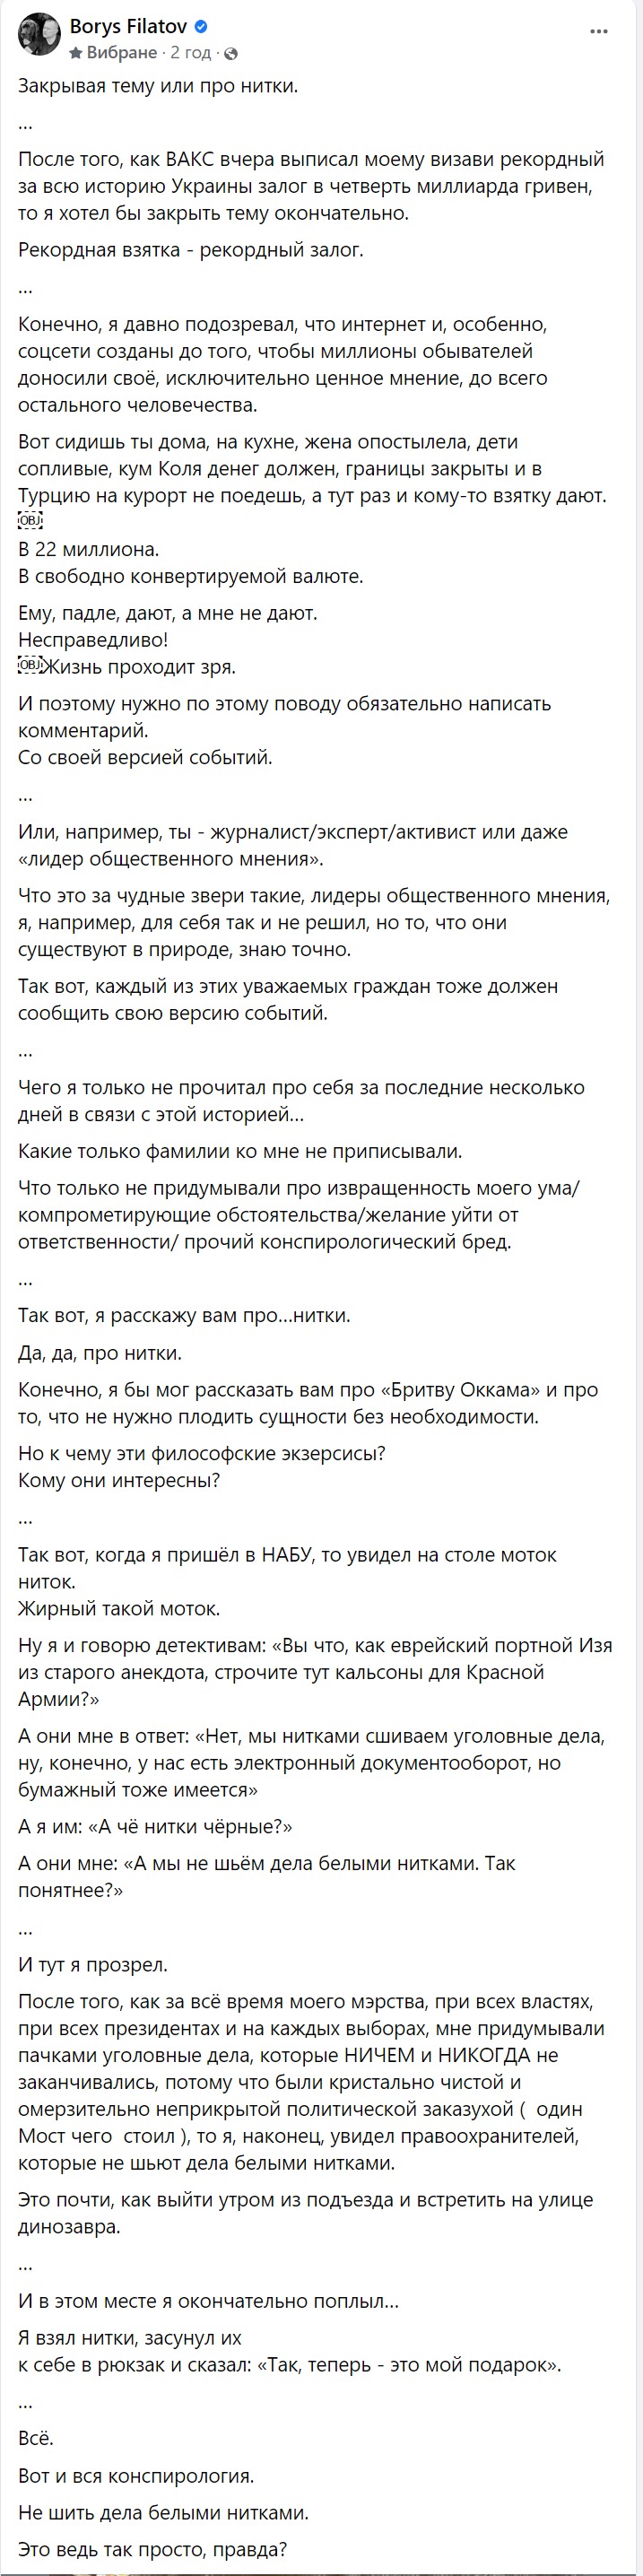 Комментарий Бориса Филатова - || фото: facebook.com/profile.php?id=100002157183088